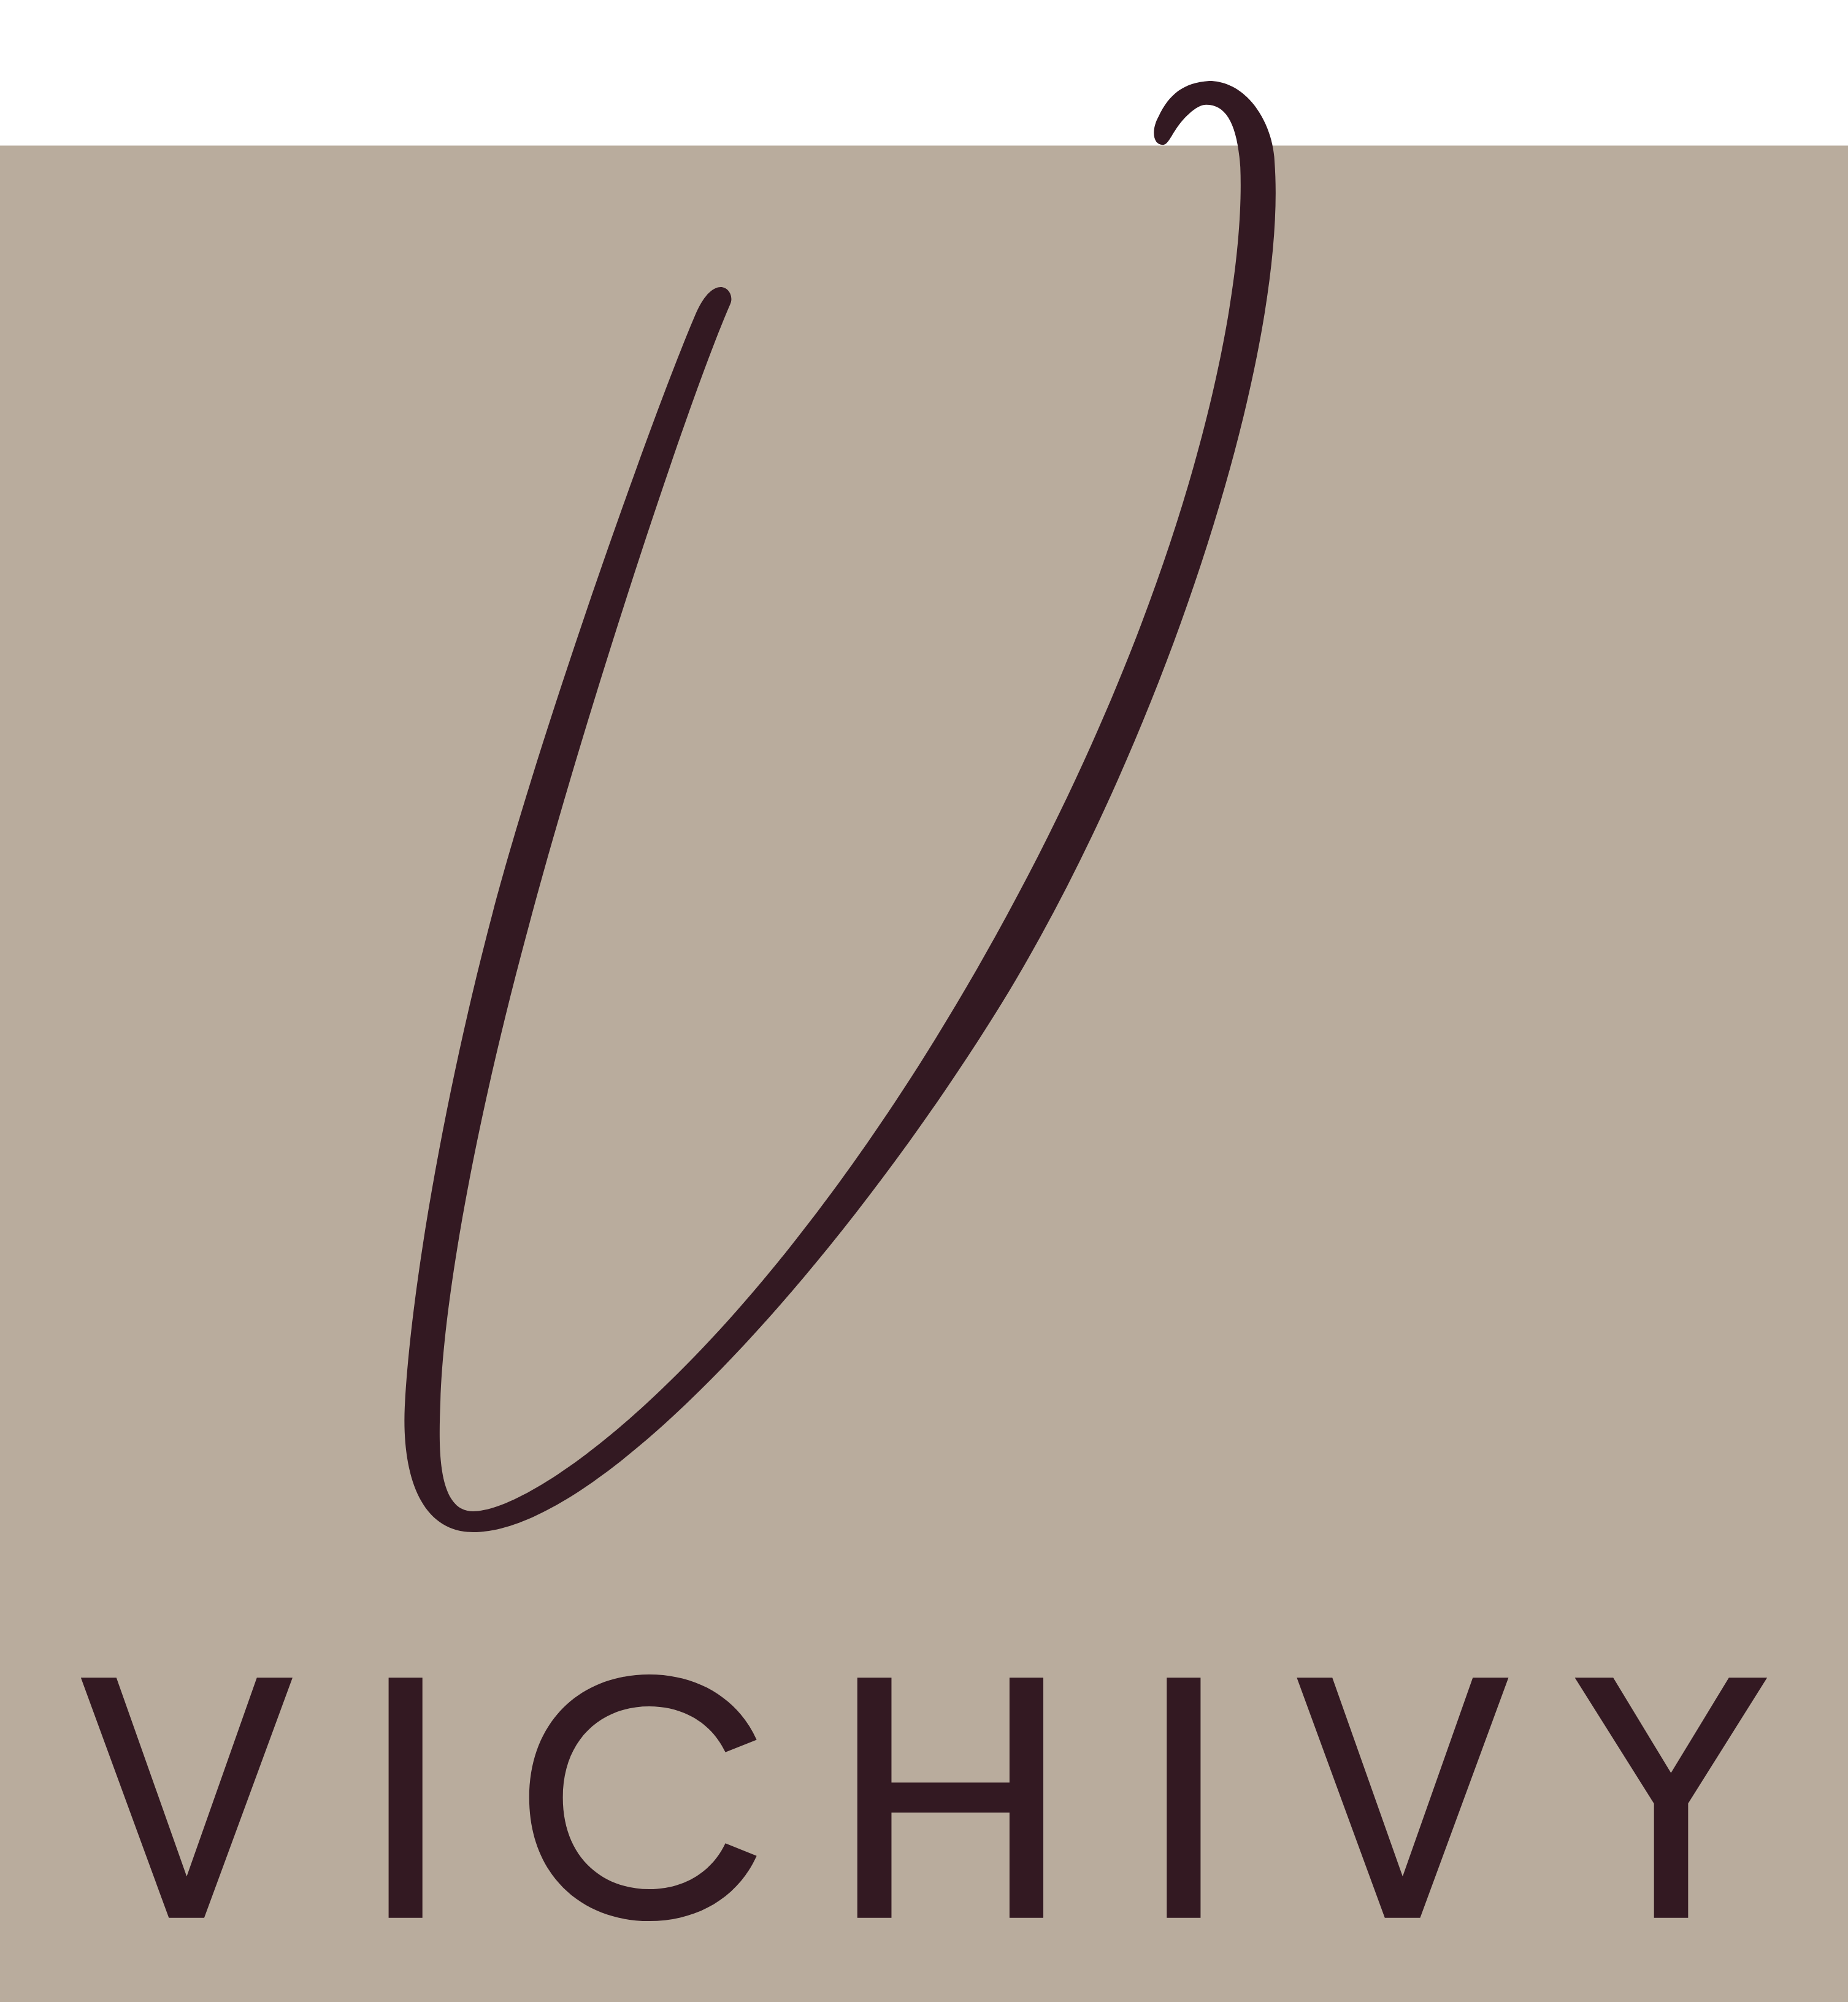 Vichivy